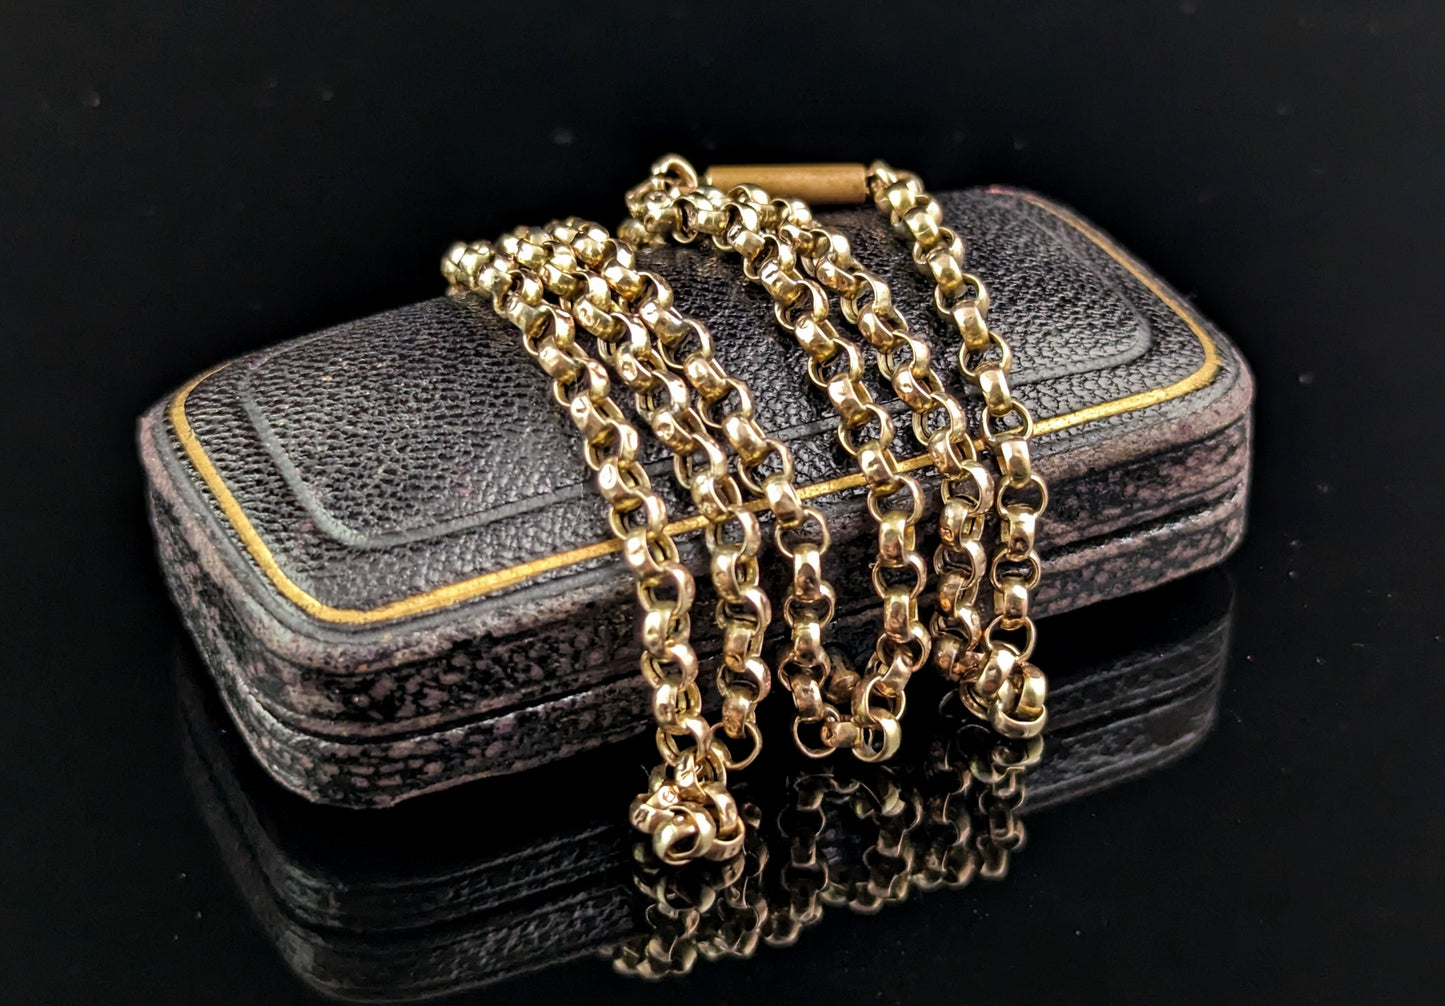 Antique 9ct gold belcher link chain necklace, Edwardian